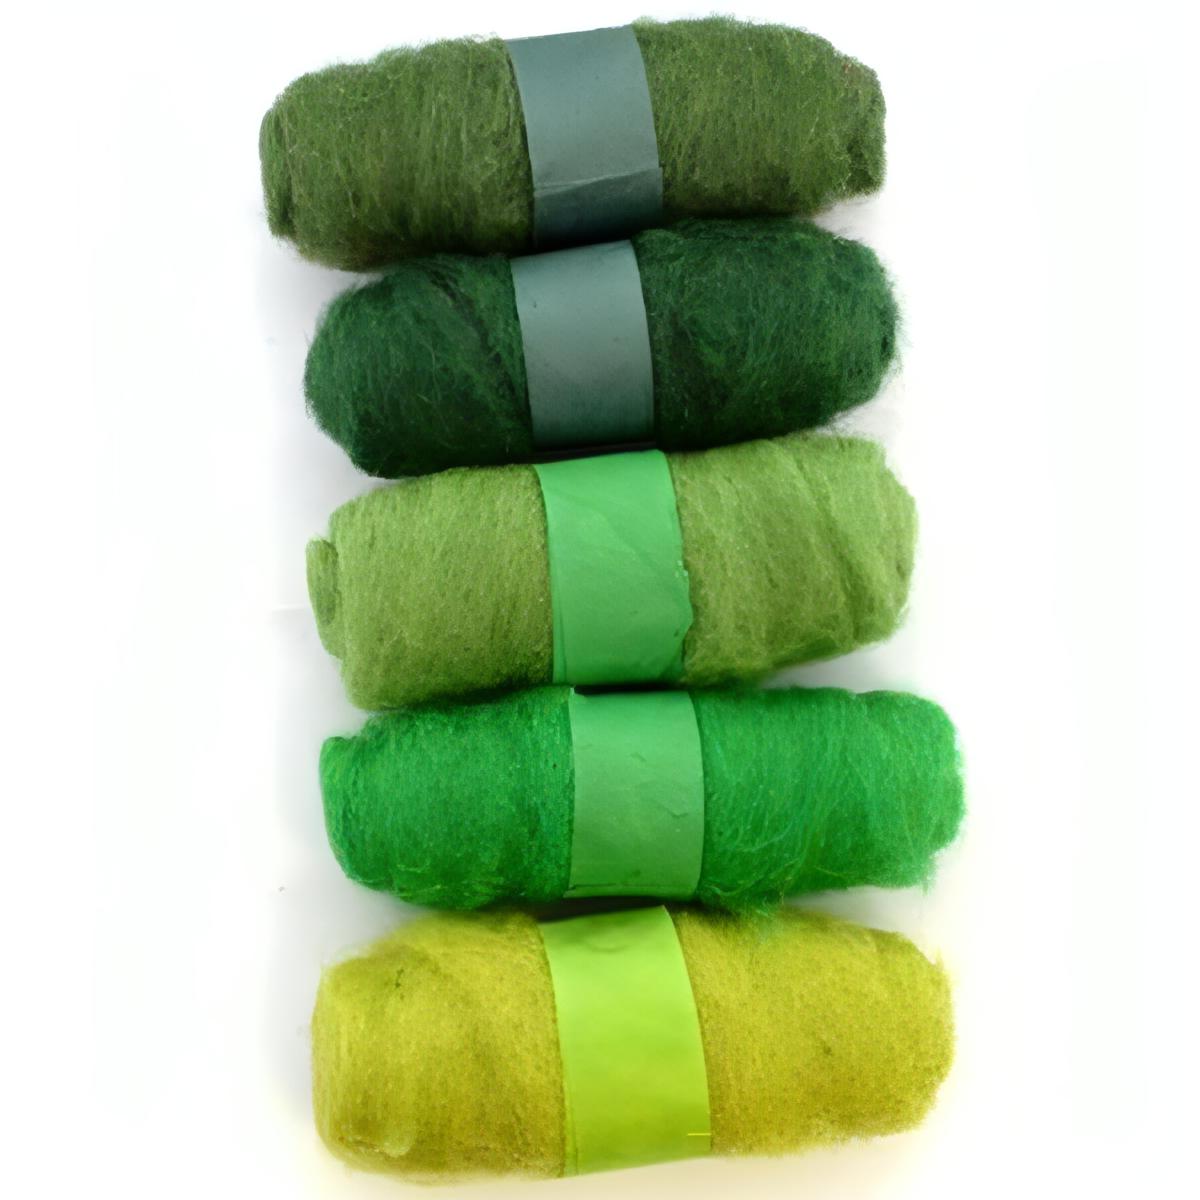 Felting Fibre Wool 20g - Assorted Bright Greens (5 Pack)